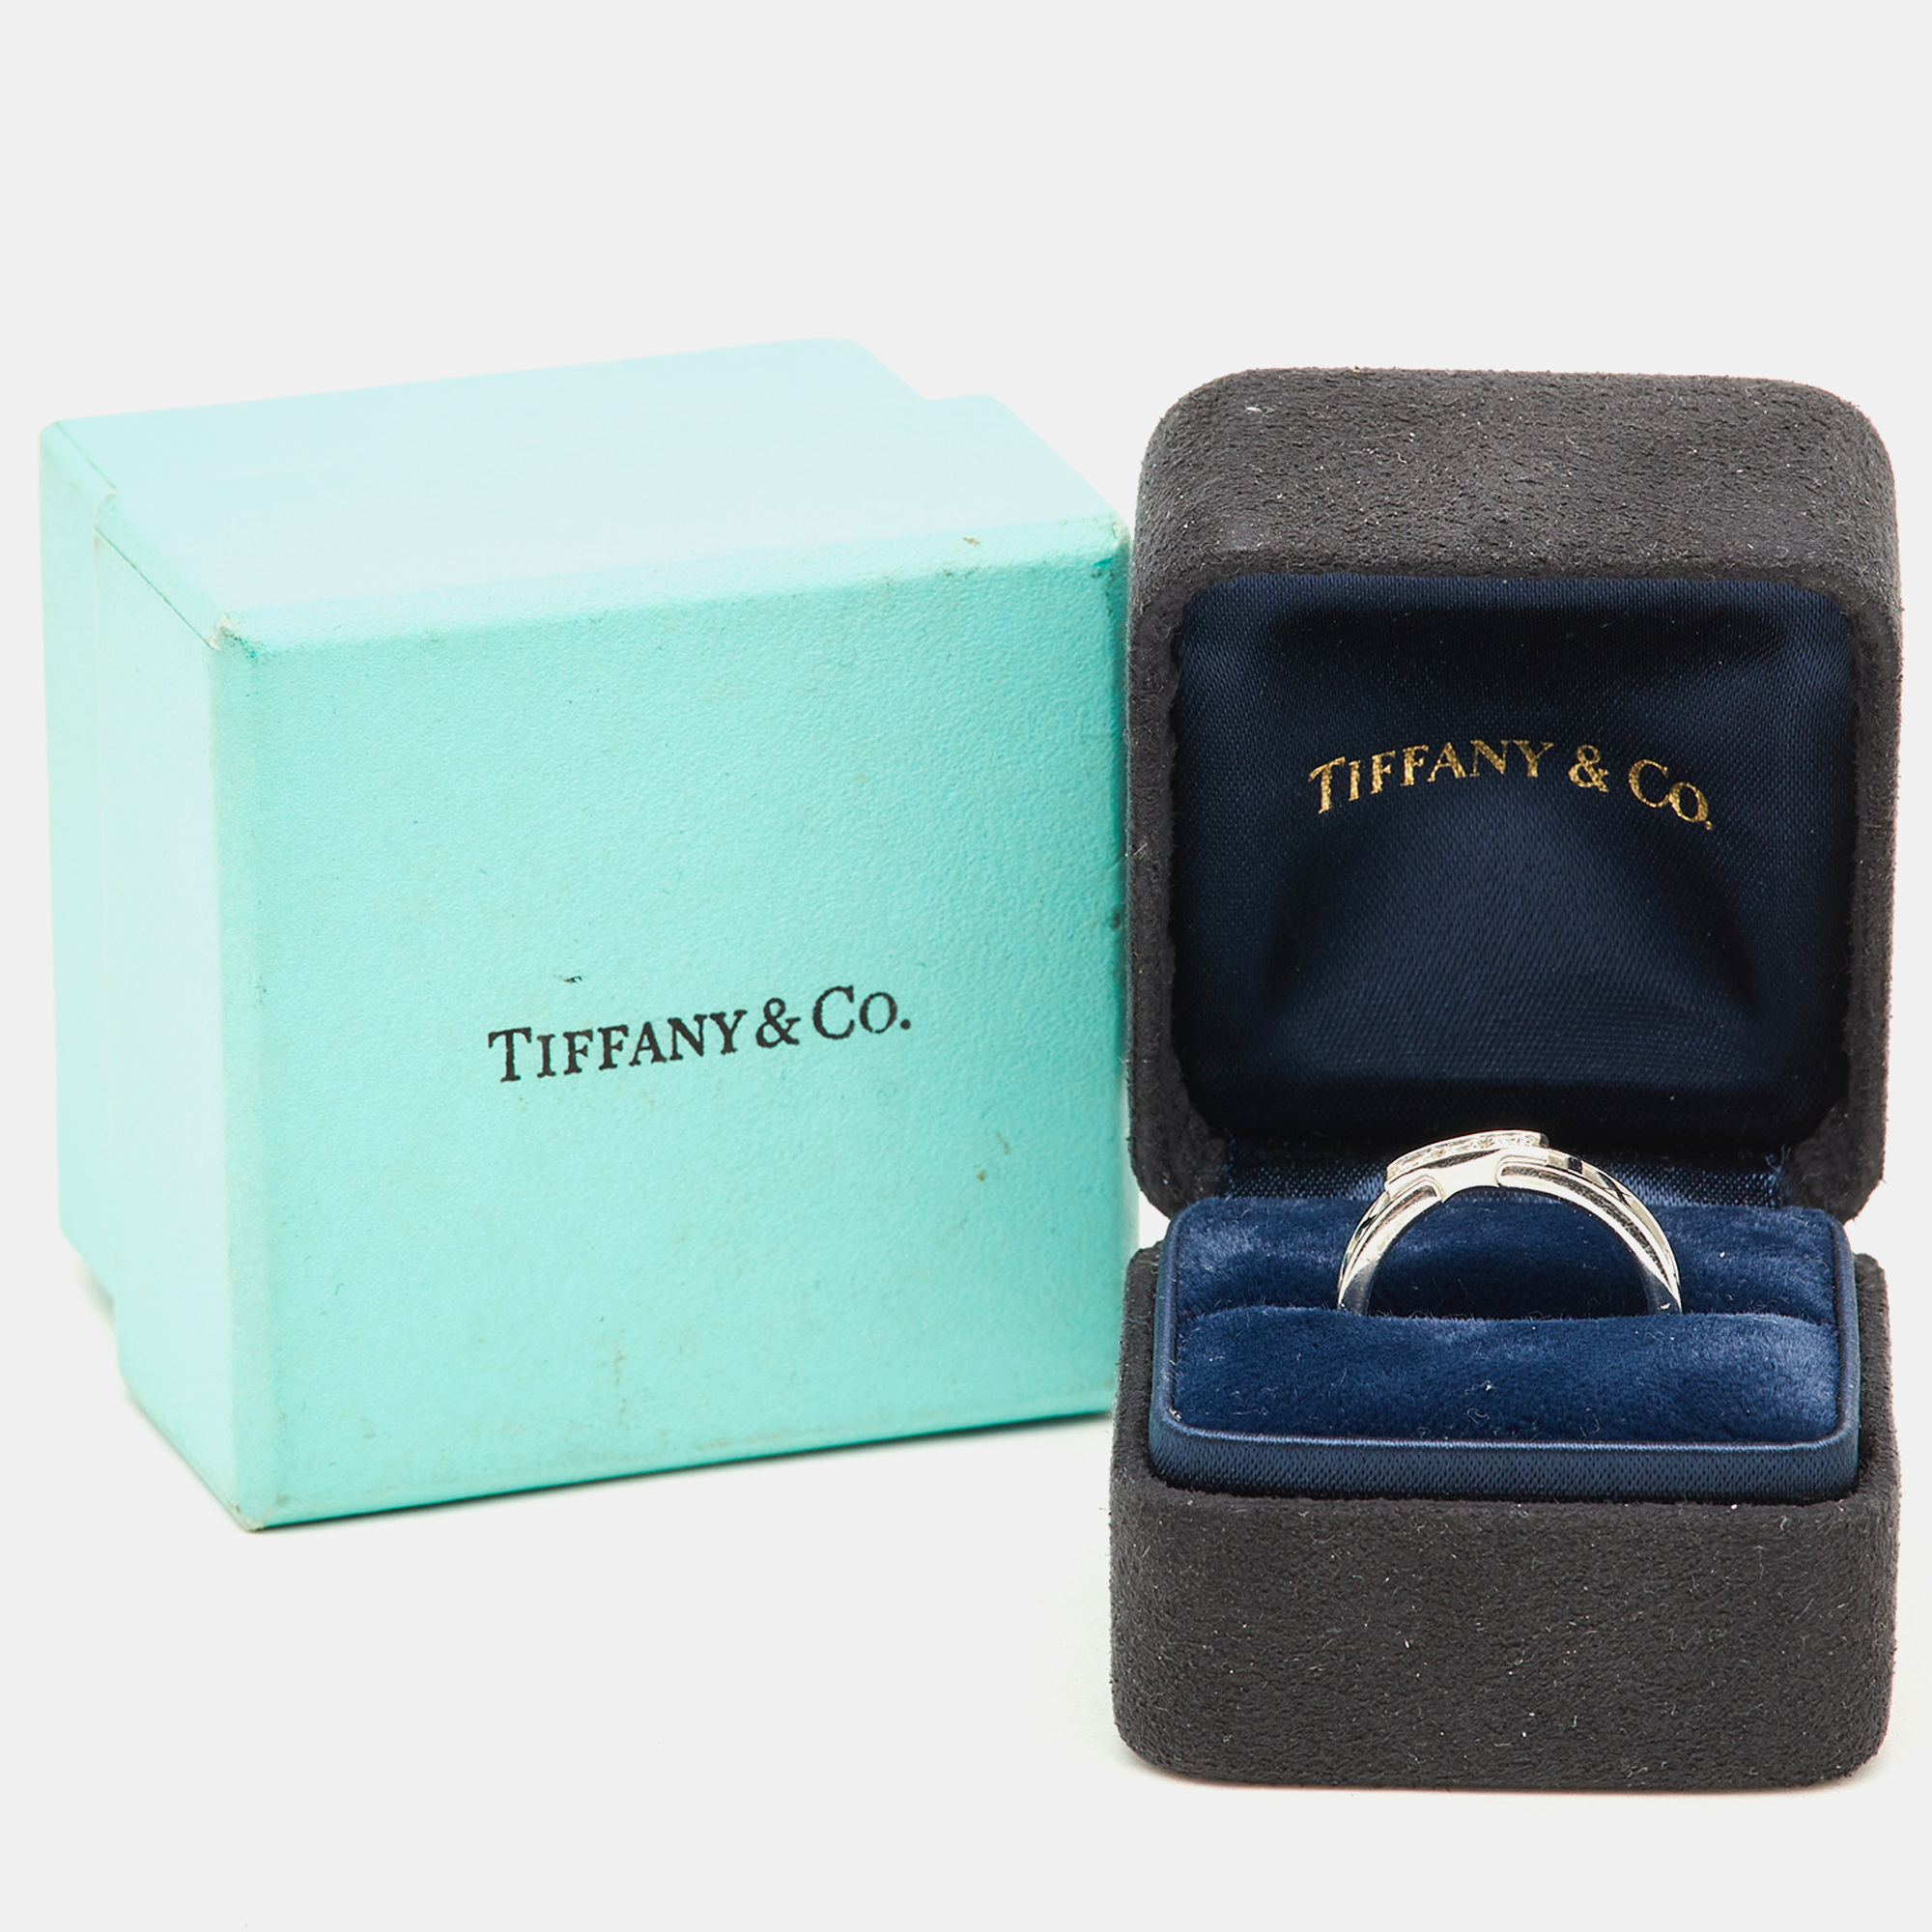 Tiffany & Co. Atlas Diamond 18K White Gold Band Ring 50